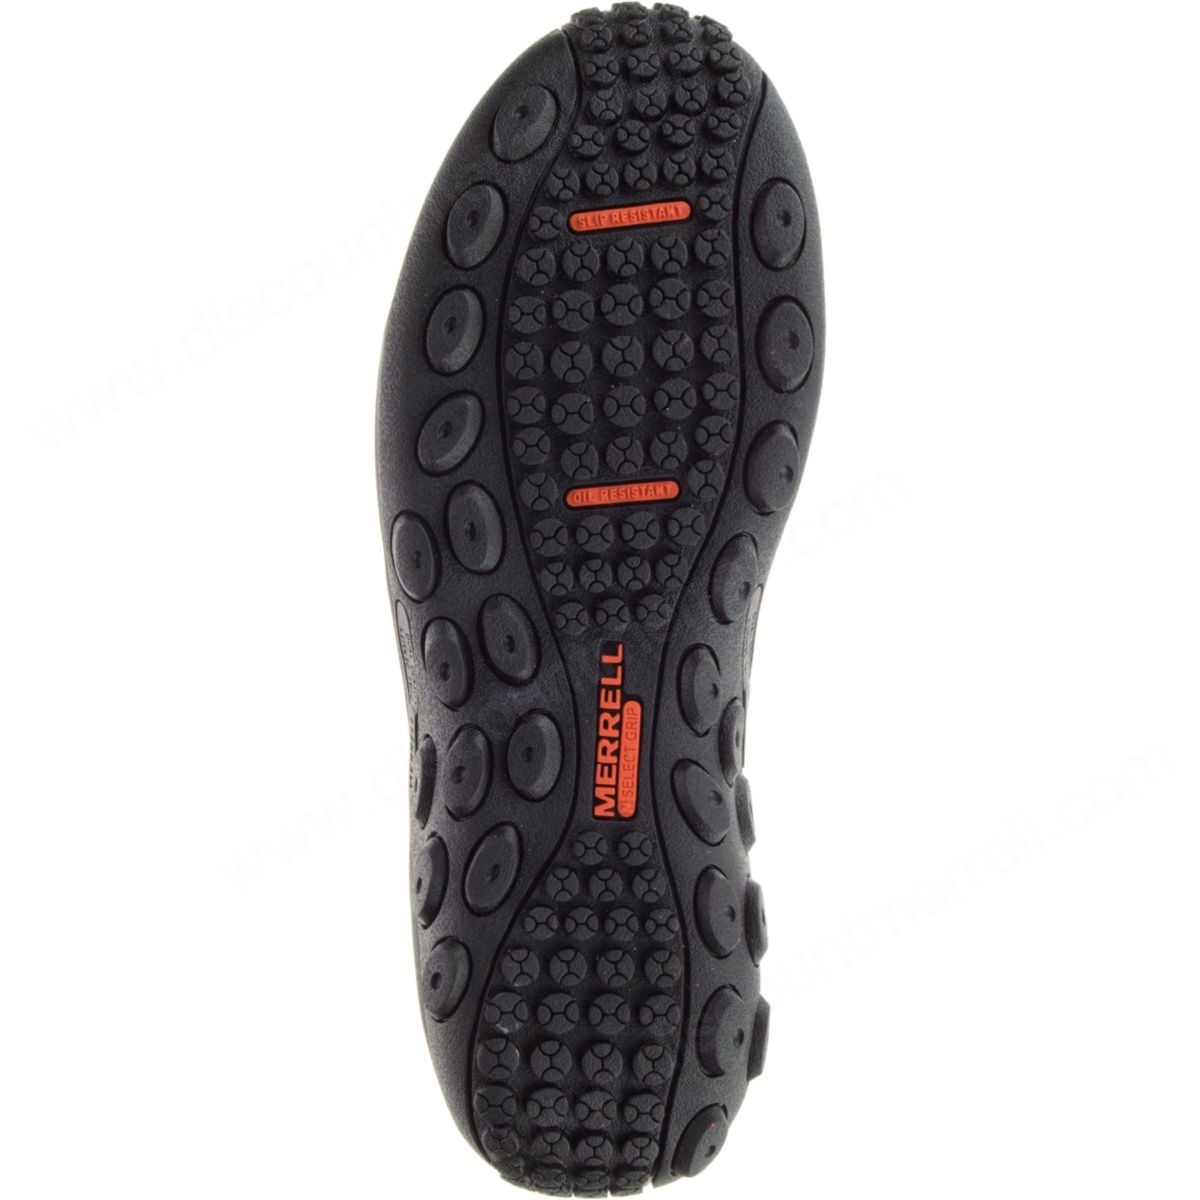 Merrell Man's Jungle Moc Comp Toe Work Sneakers Black - -1